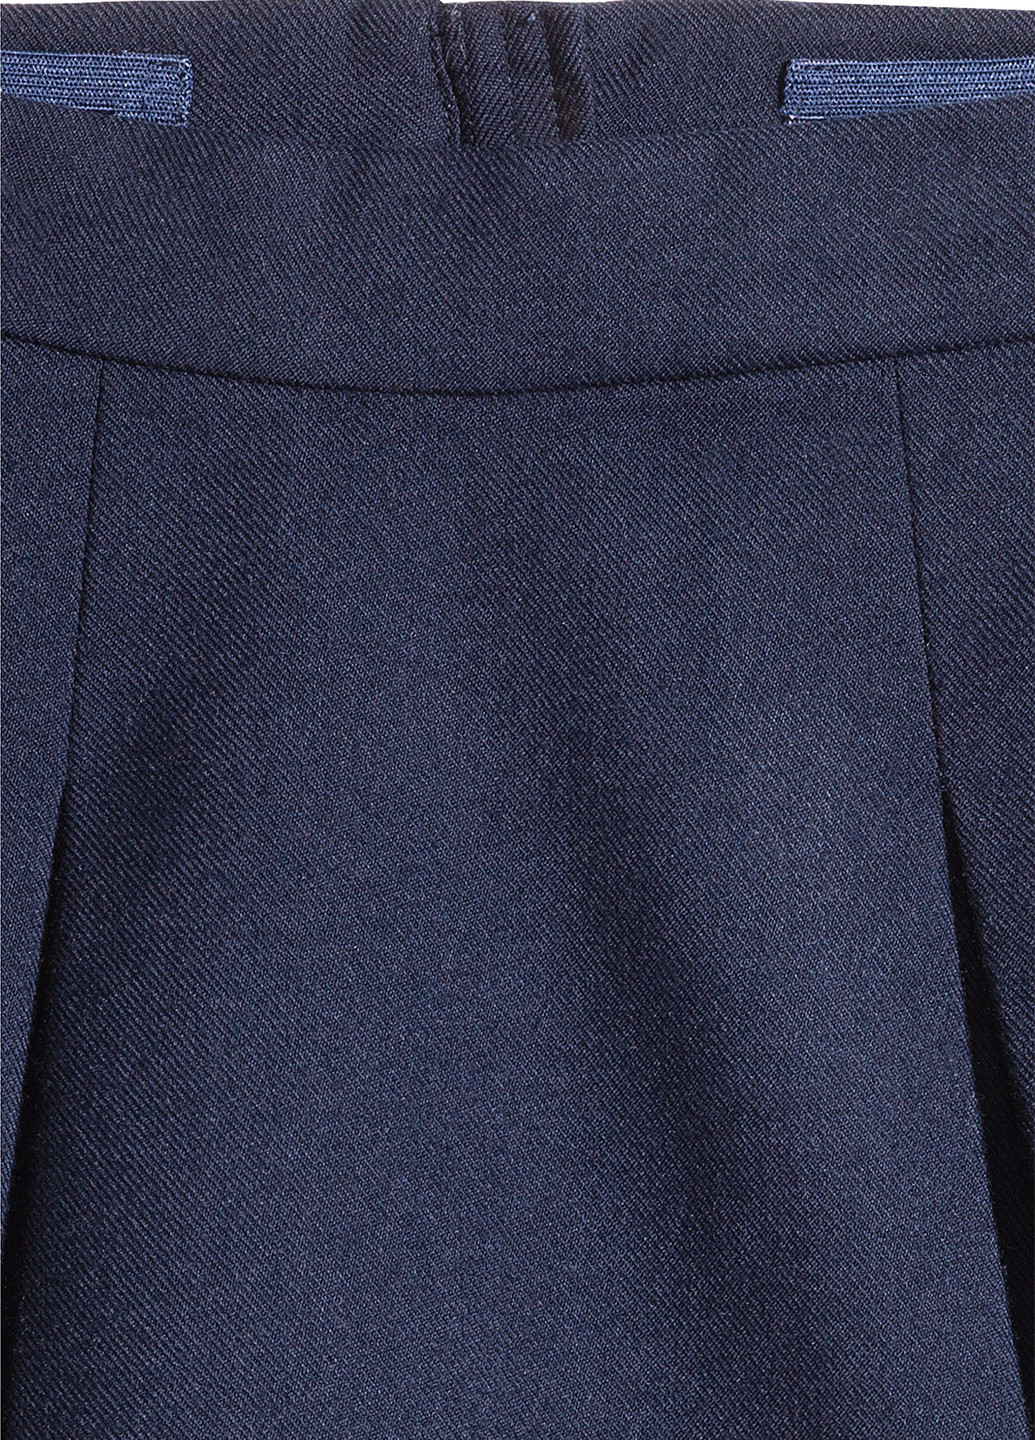 Темно-синяя офисная однотонная юбка H&M мини